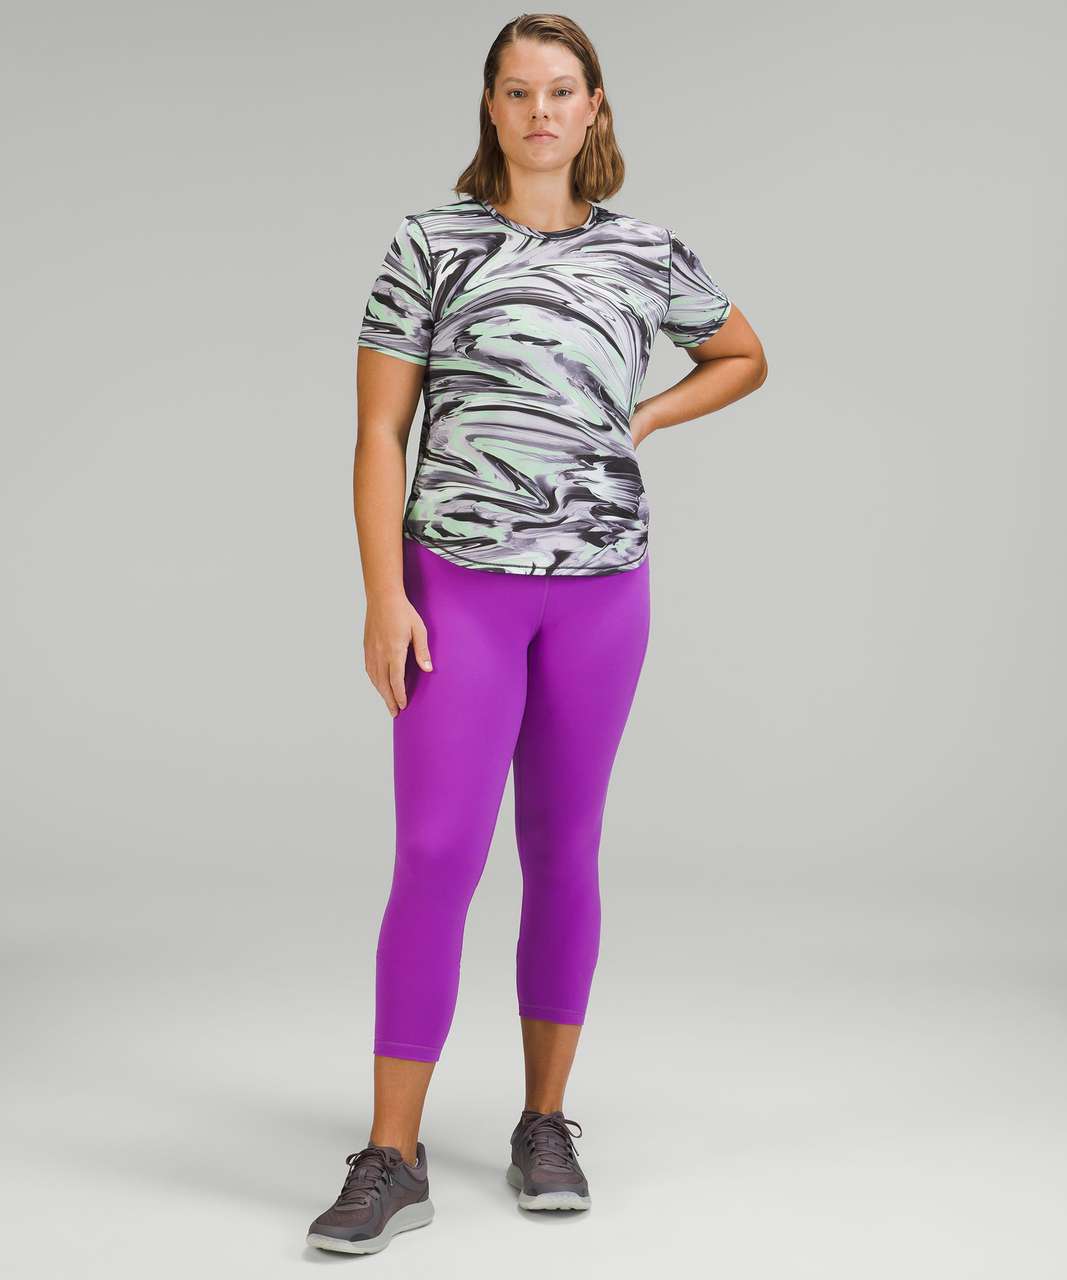 Lululemon High-neck Running And Training Reflective T-shirt